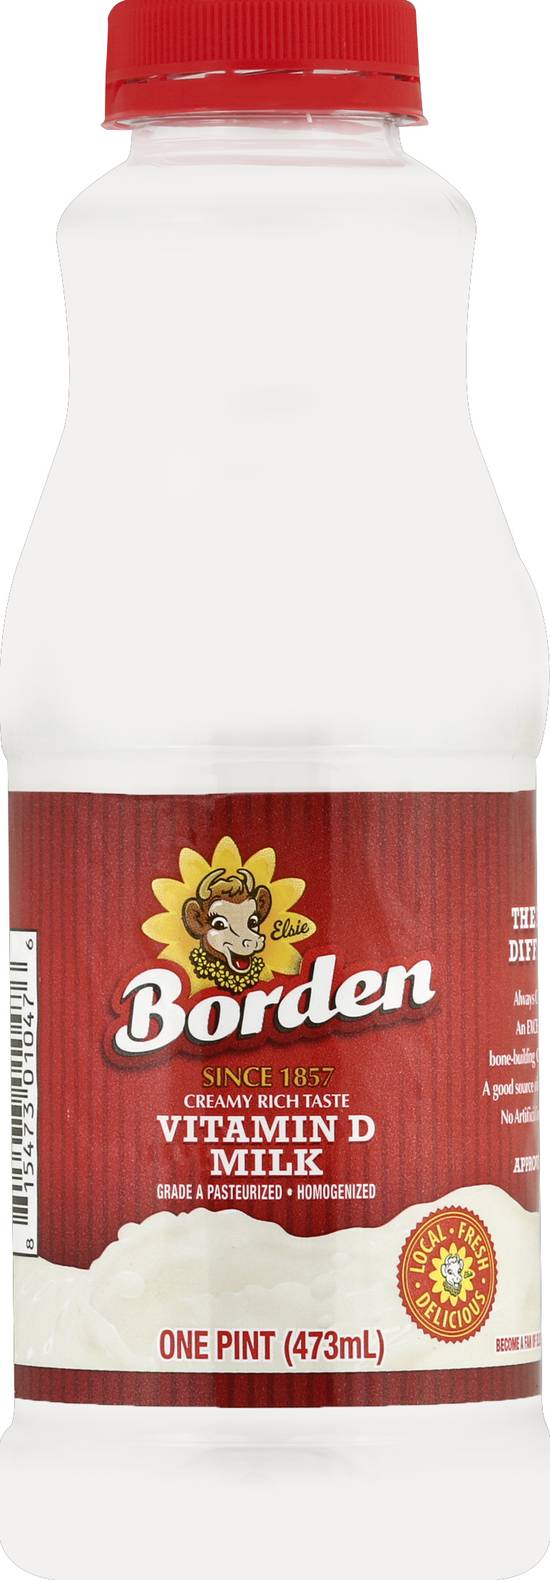 Borden Vitamin D Milk (1 pt)